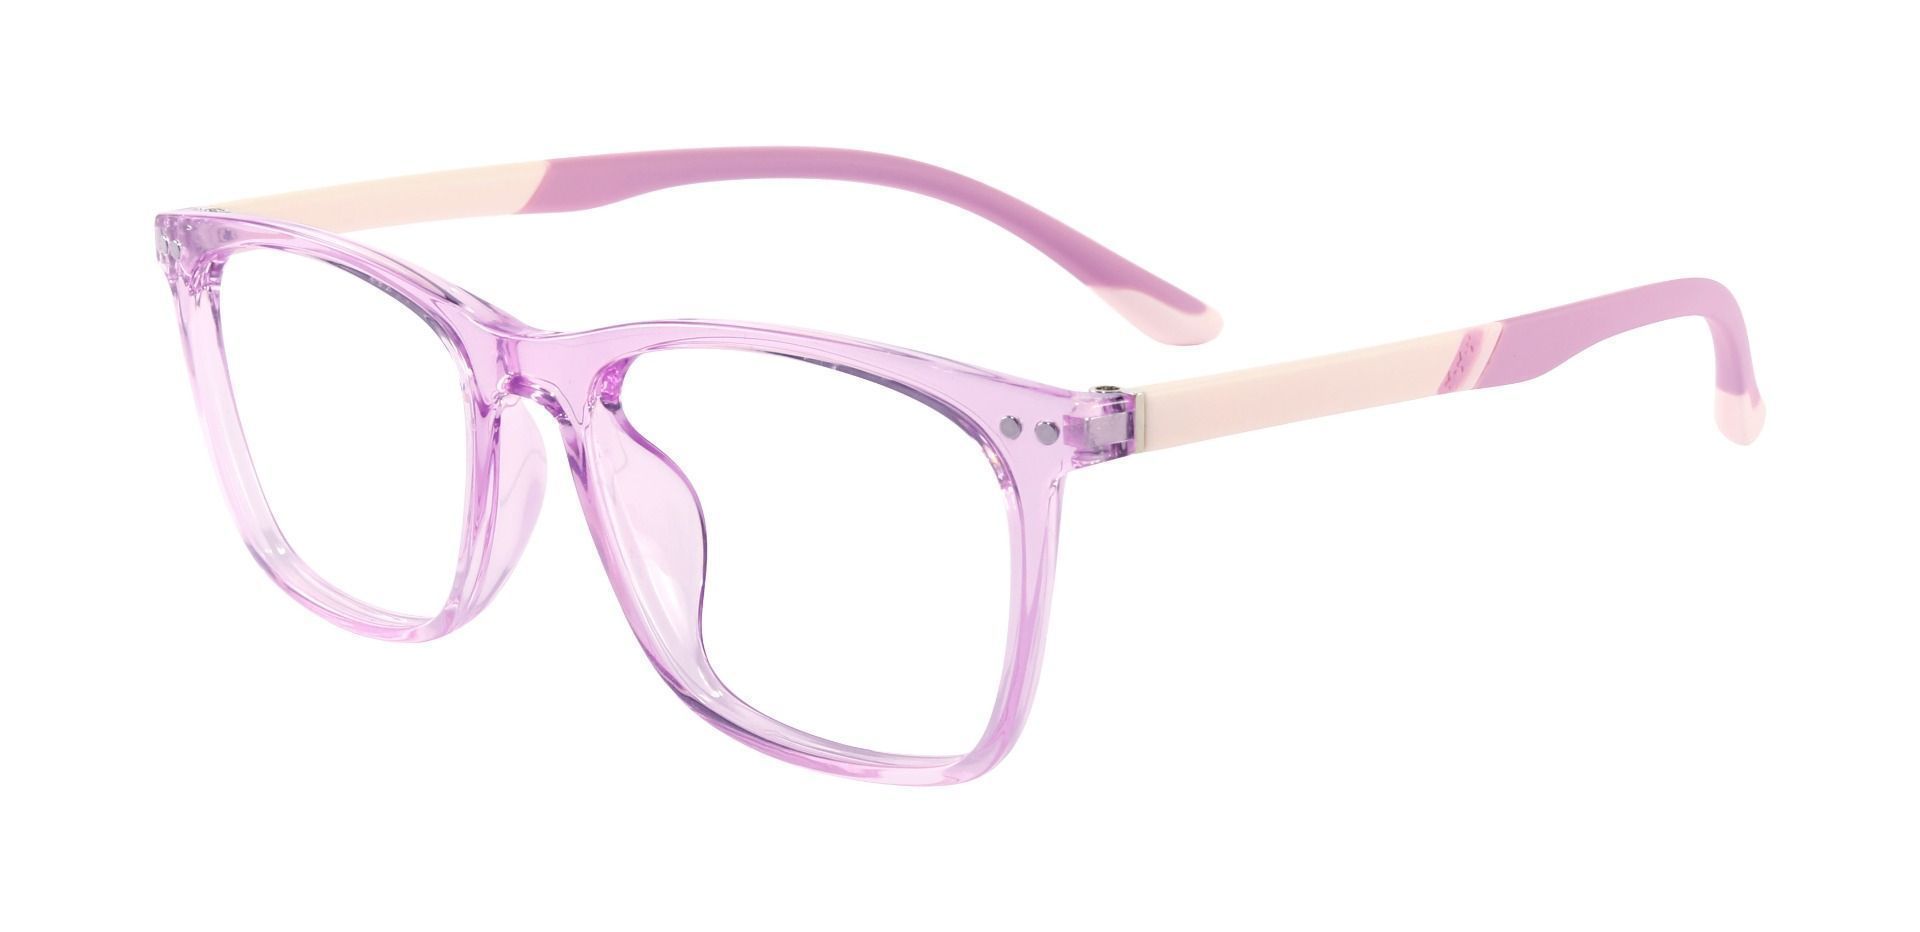 Slane Square Prescription Glasses - Pink